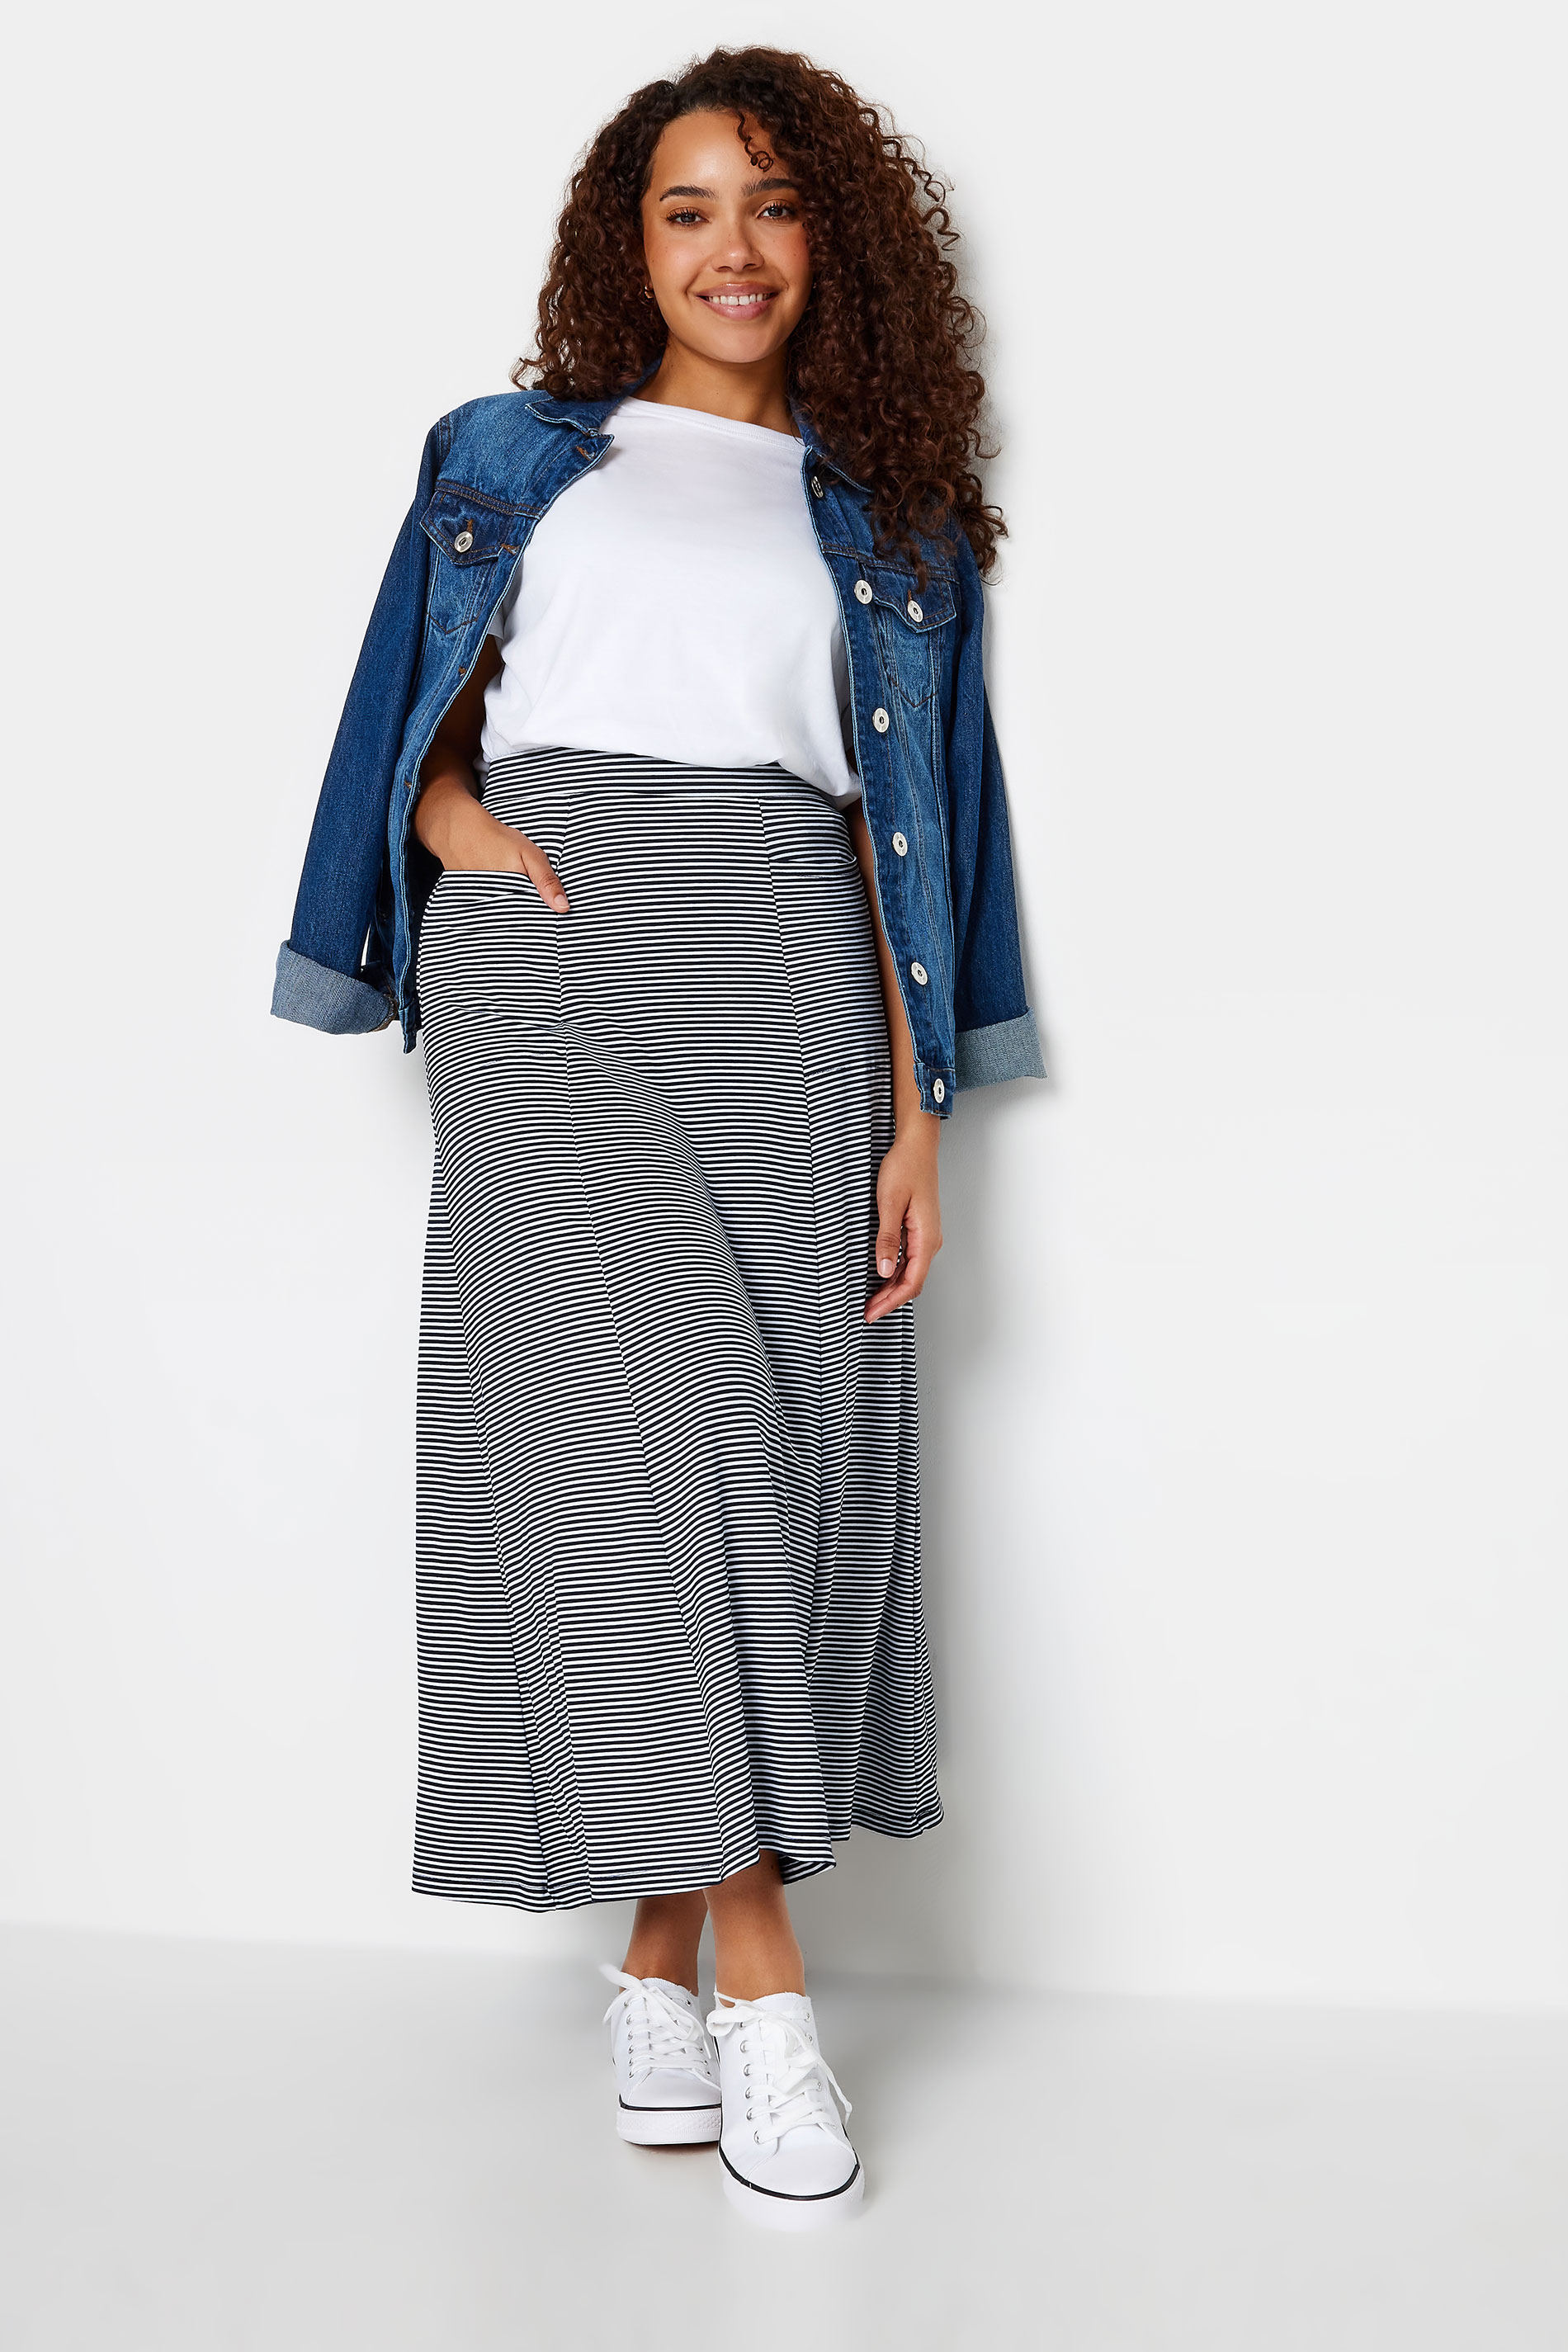 M&Co Navy Blue & White Striped Pocket Maxi Skirt | M&Co 2